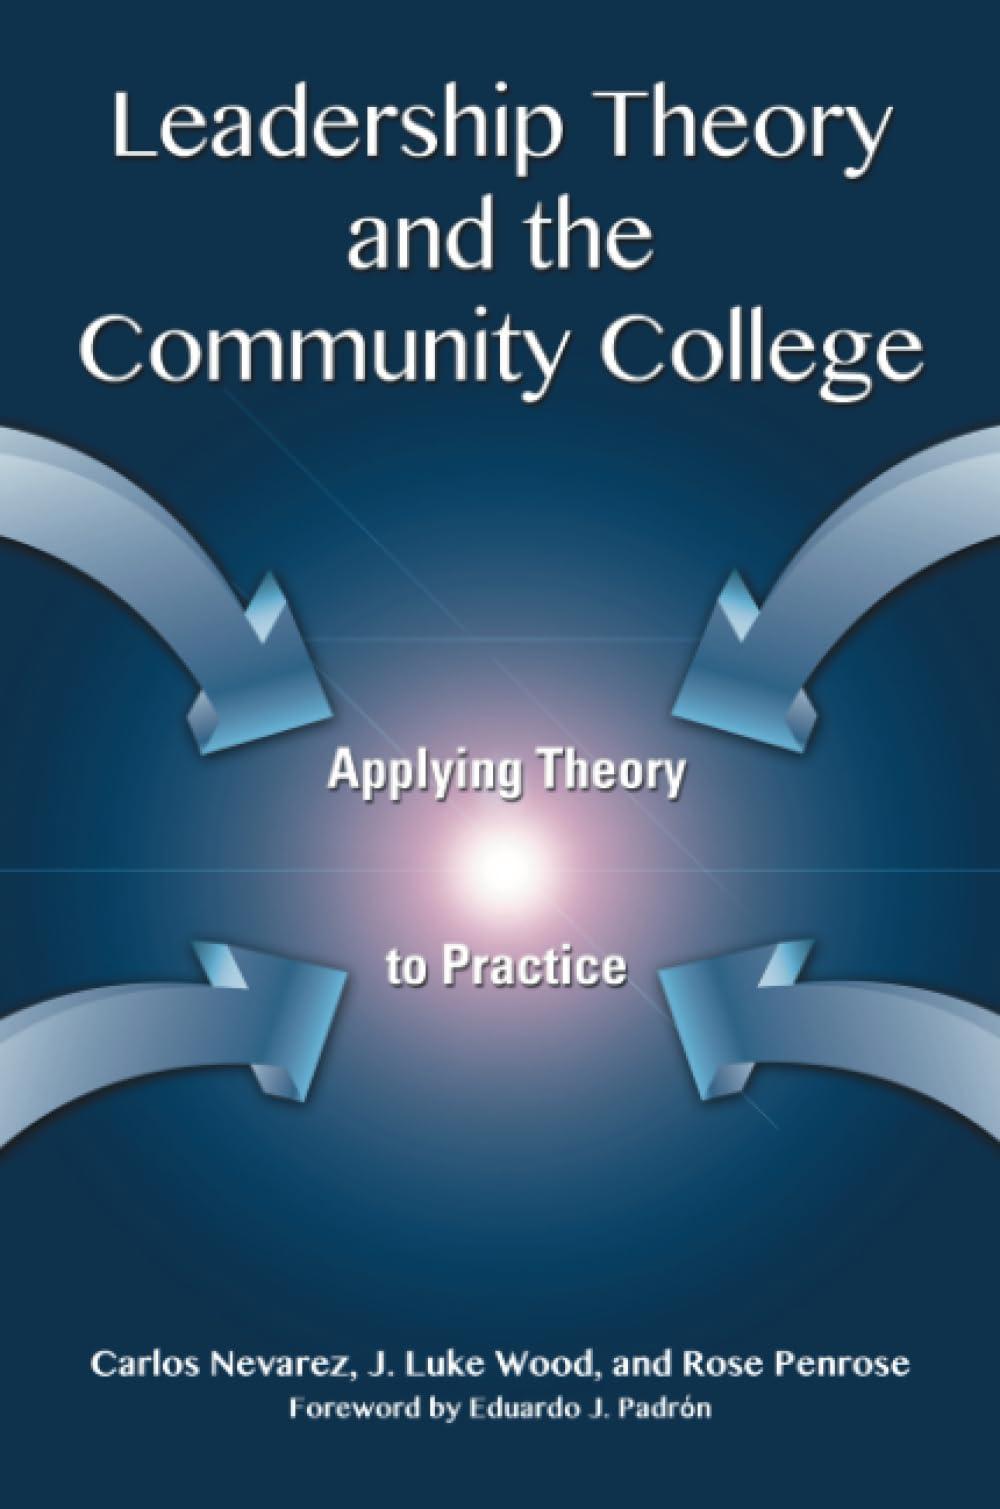 leadership theory and the community college 1st edition carlos nevarez, j. luke wood, rose penrose